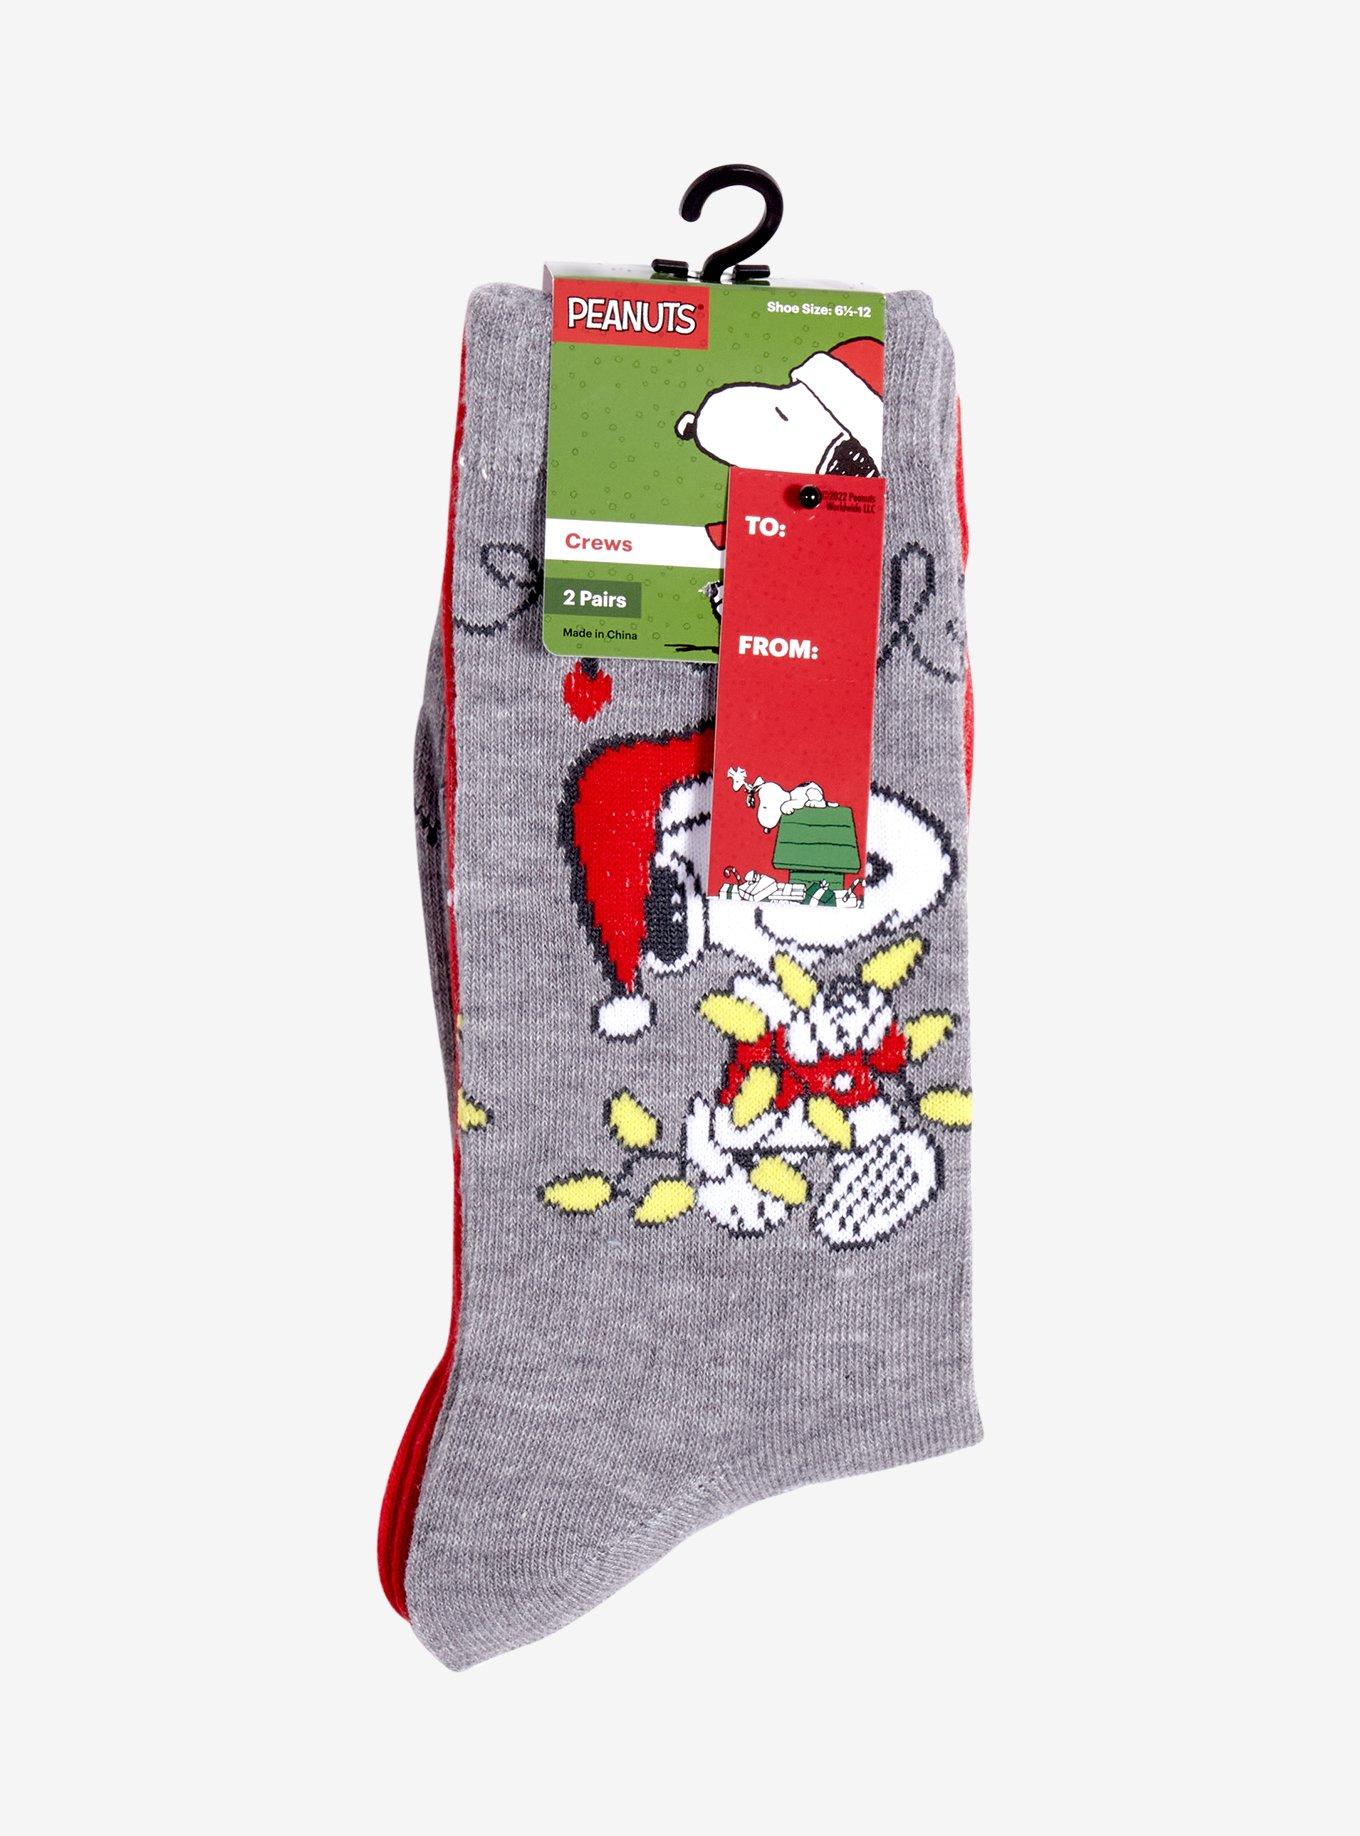 Peanuts Snoopy & Woodstock Holiday Crew Socks 2 Pair, , hi-res